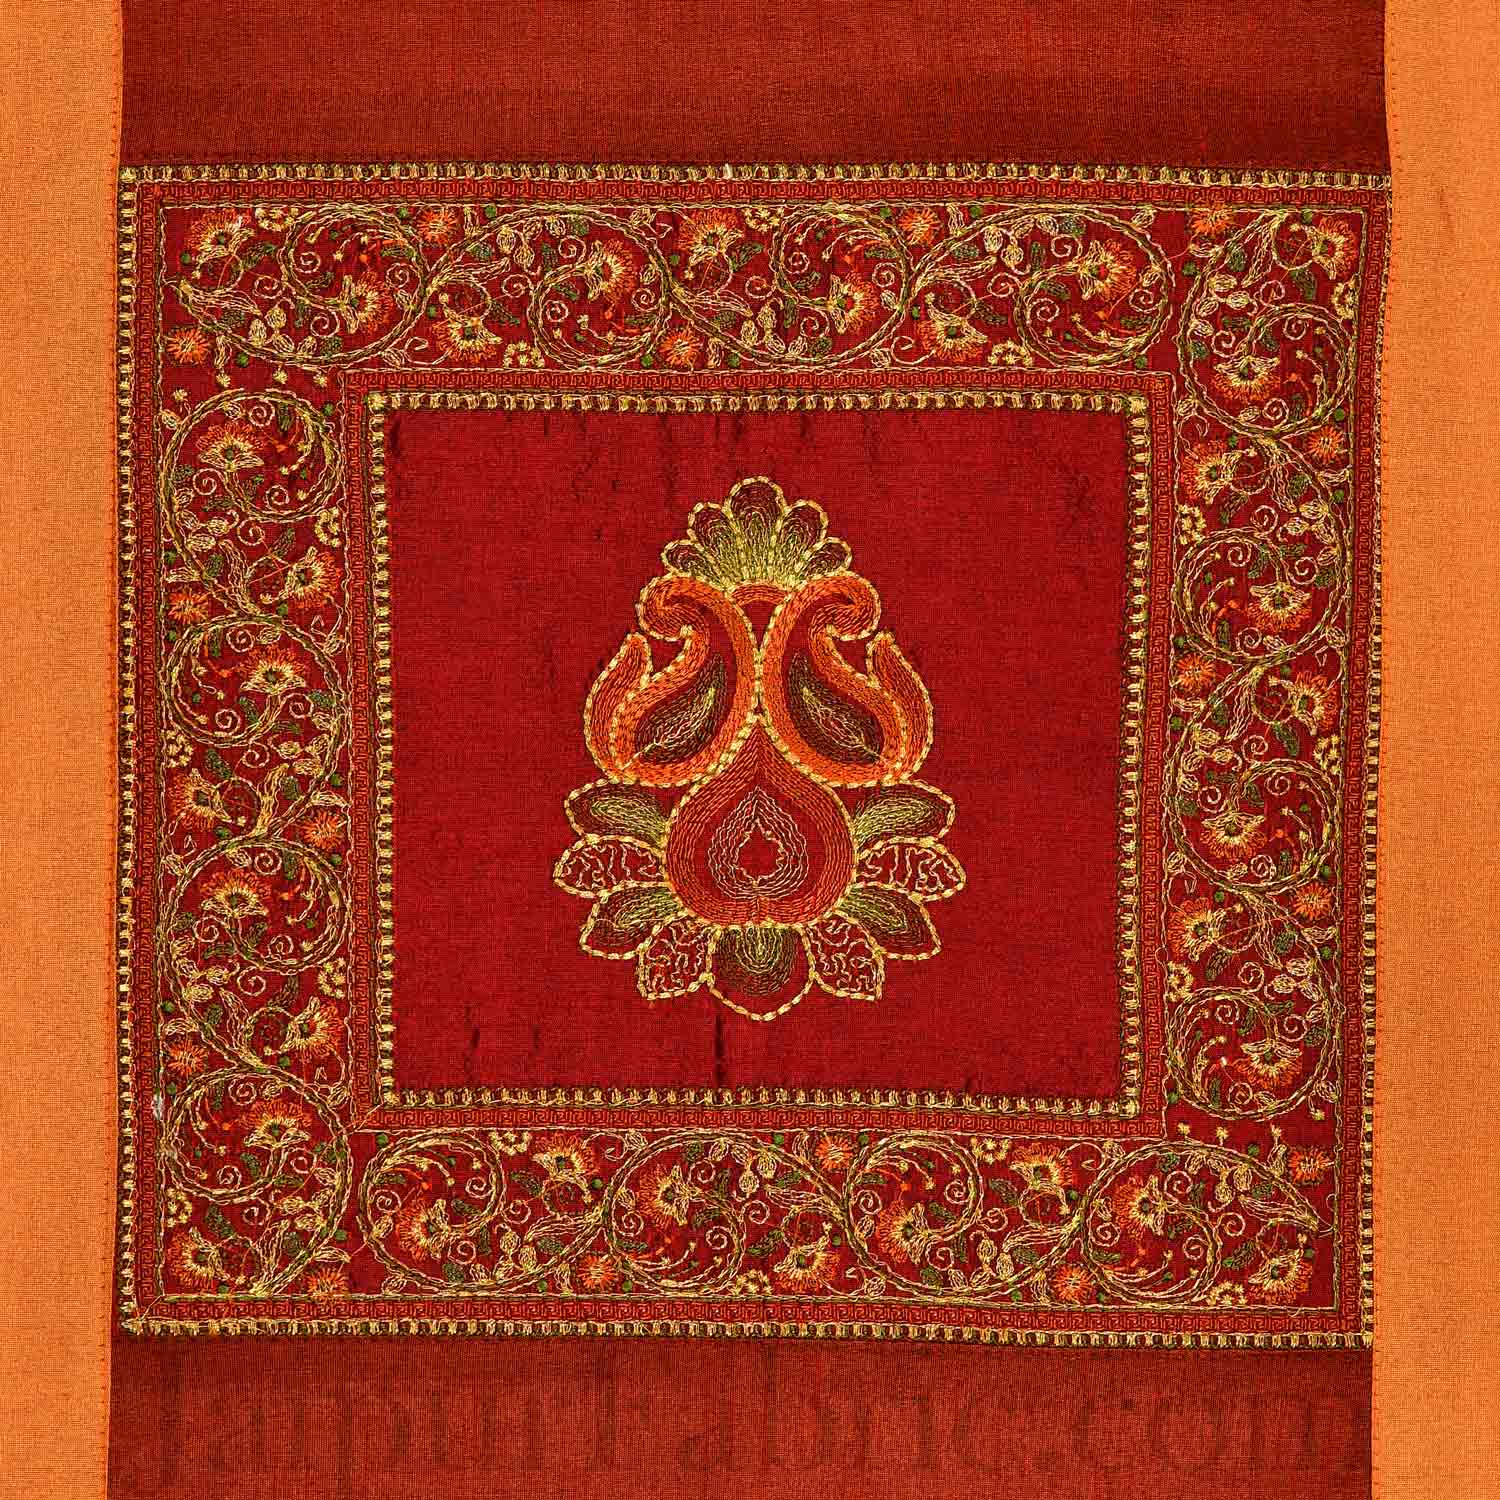 Orange Maroon Base Machine Embroidery and Zari Thread Work Silk Double Bed Sheet